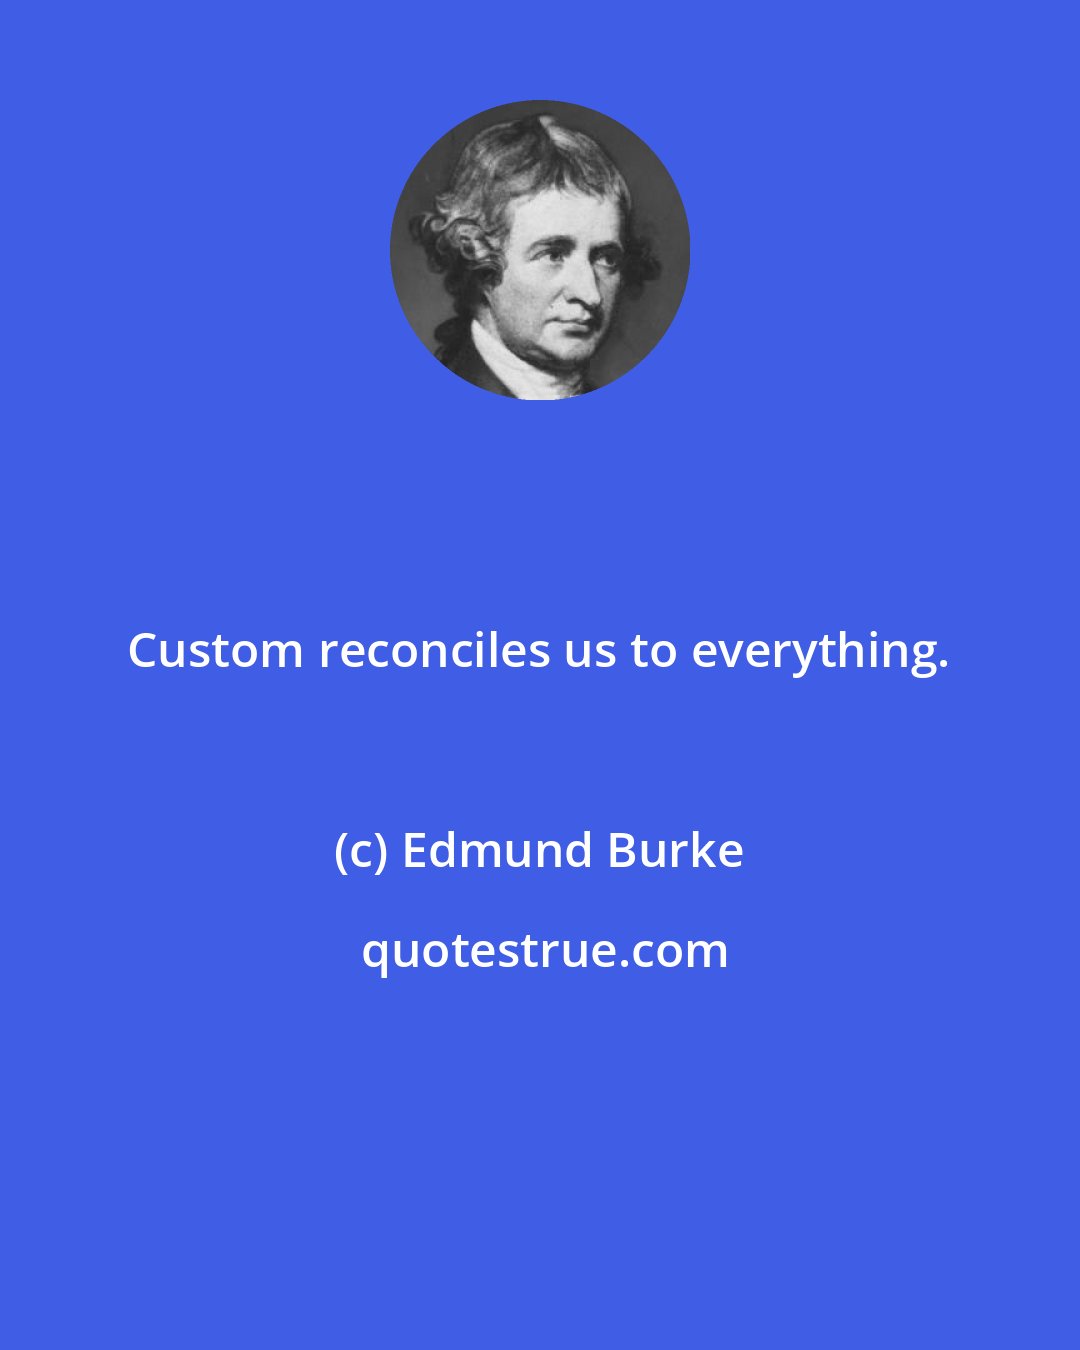 Edmund Burke: Custom reconciles us to everything.